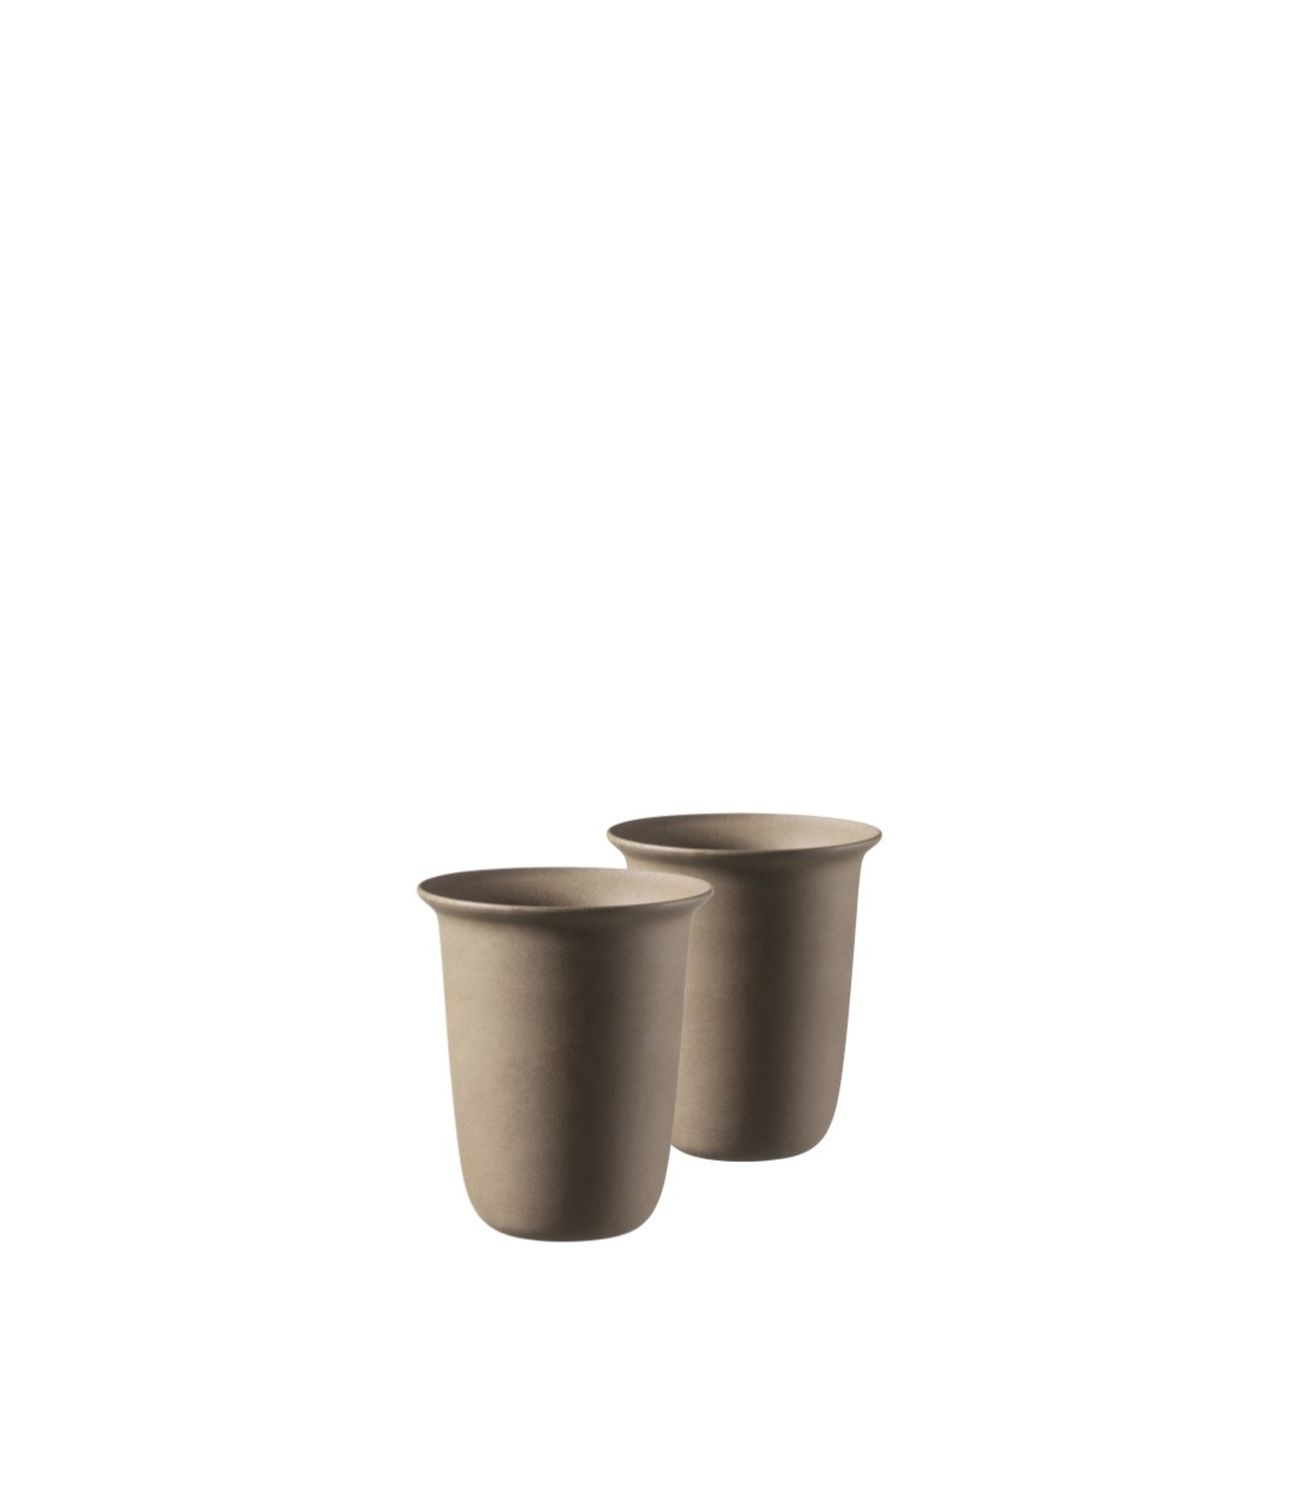 2x Ildpot Kaffeetasse Keramik Braun 1